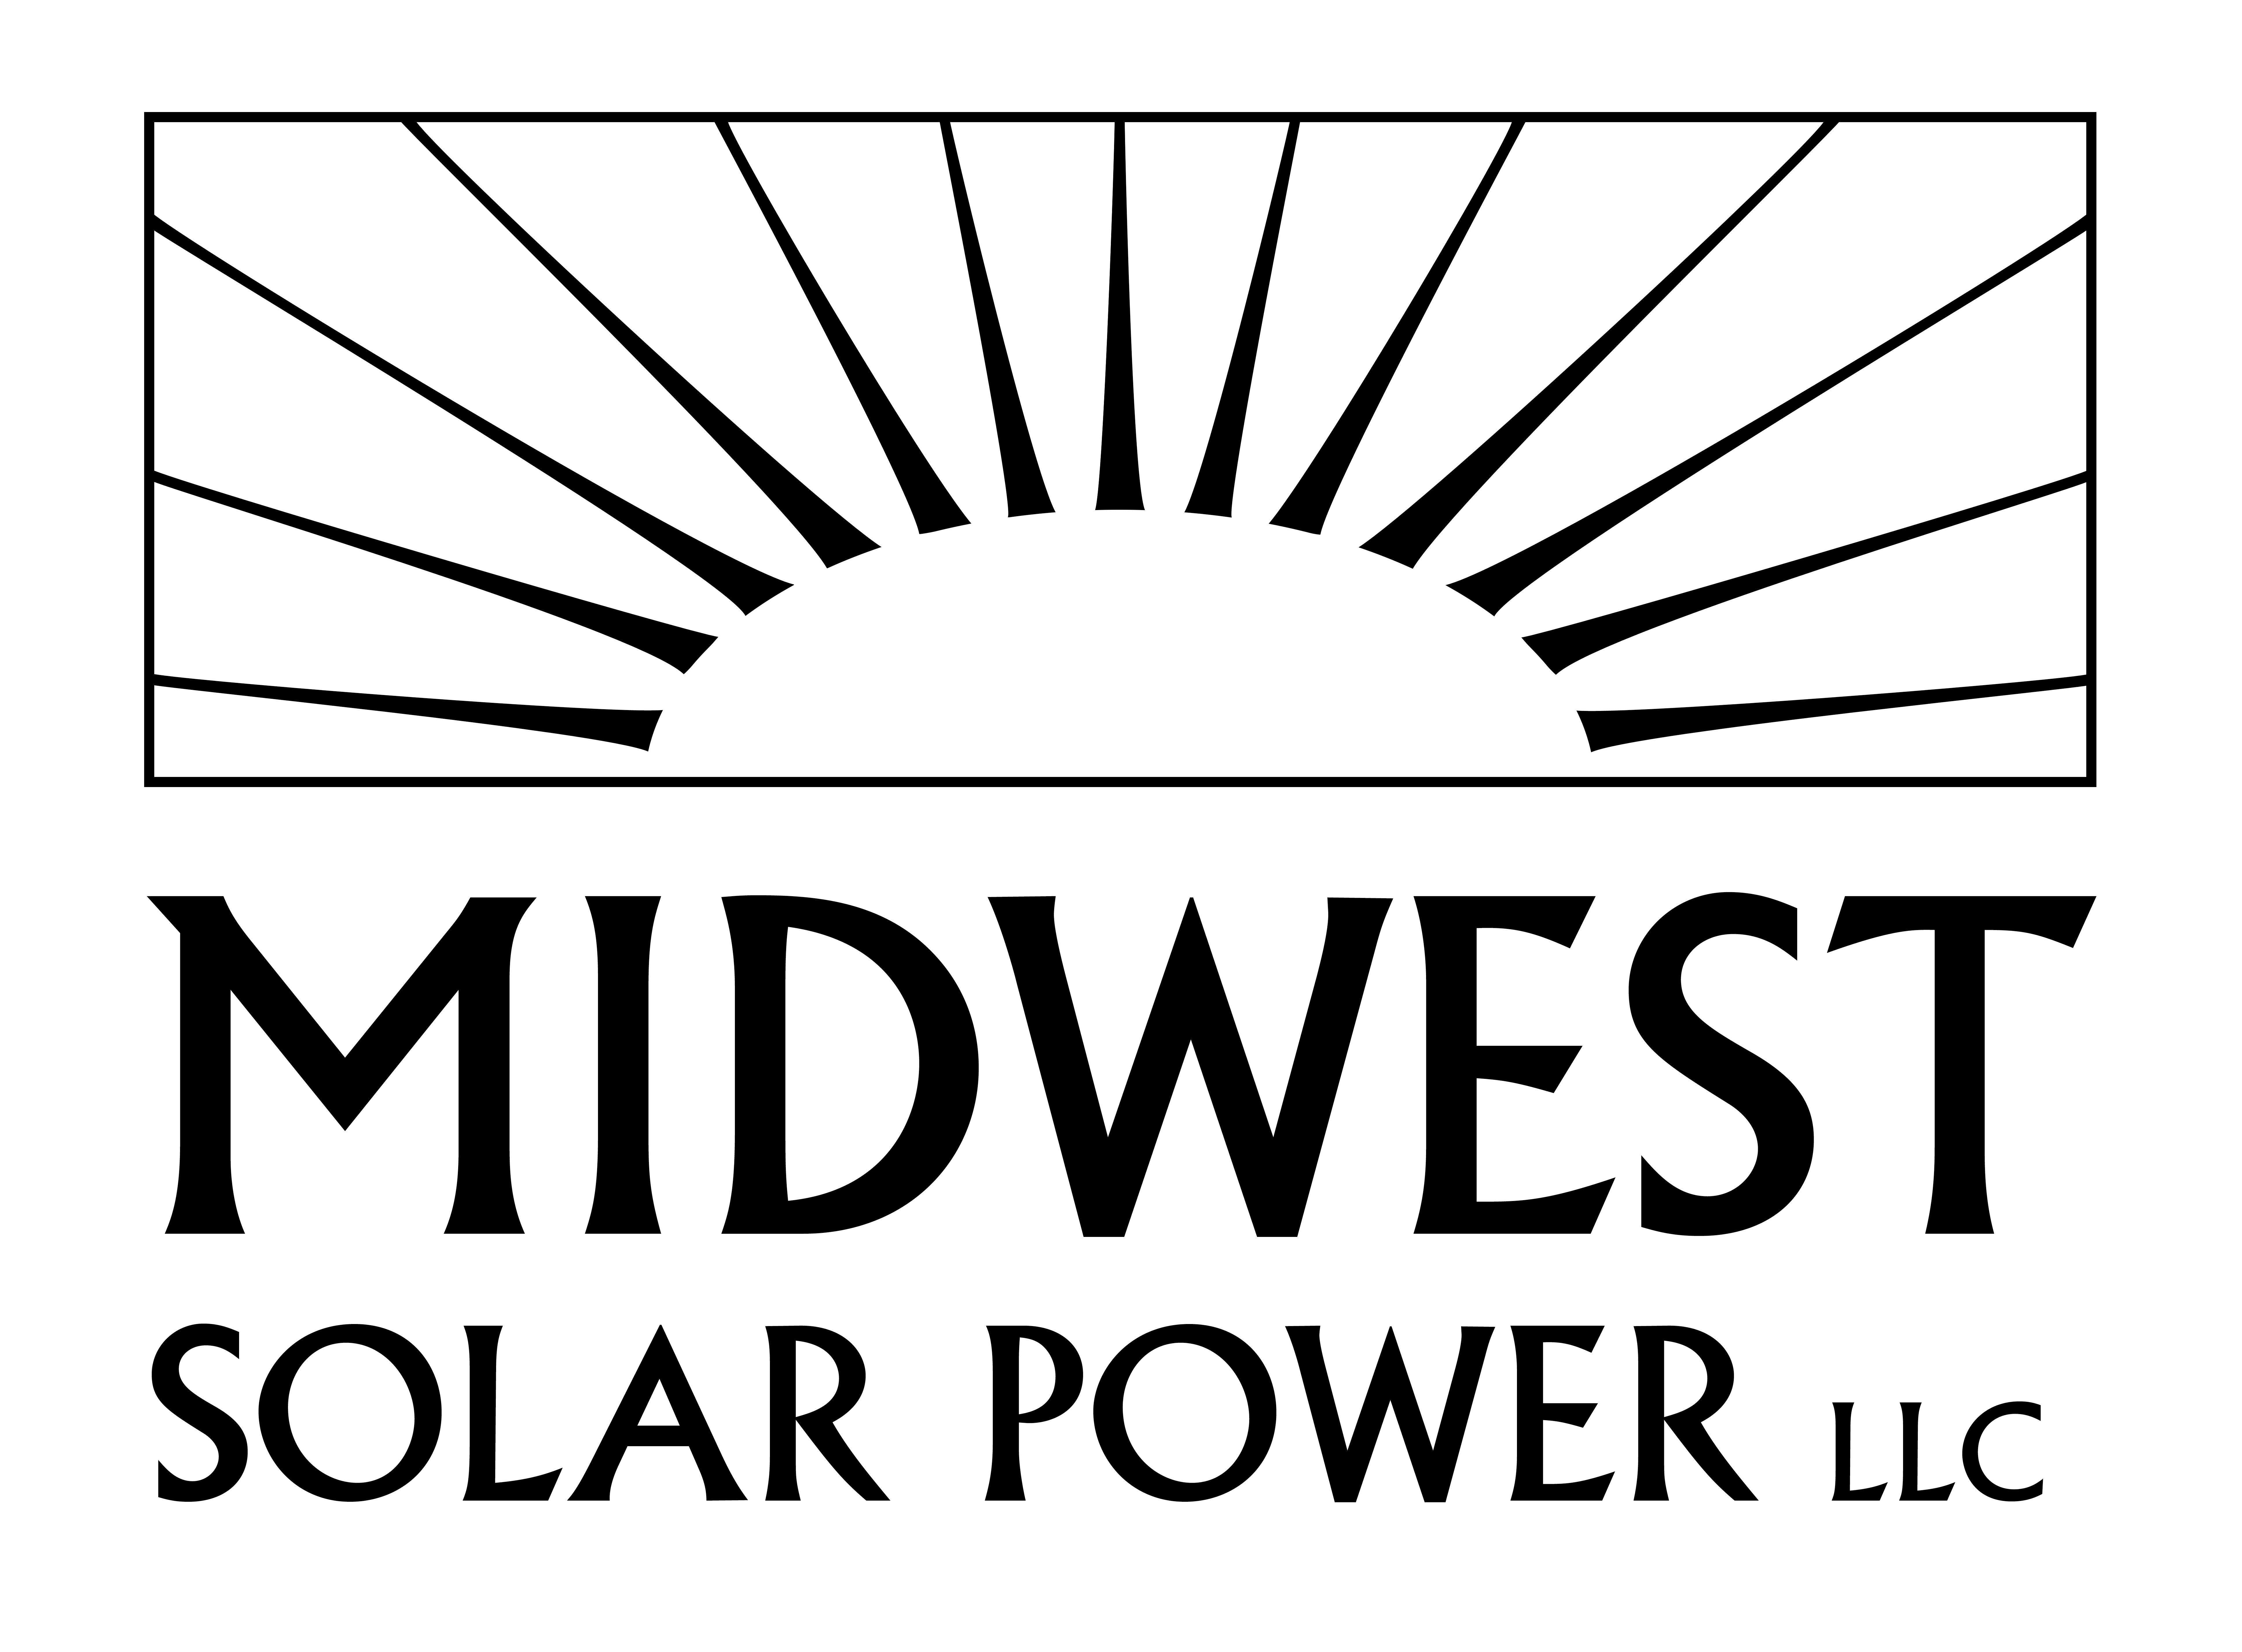 Midwest Solar Power logo